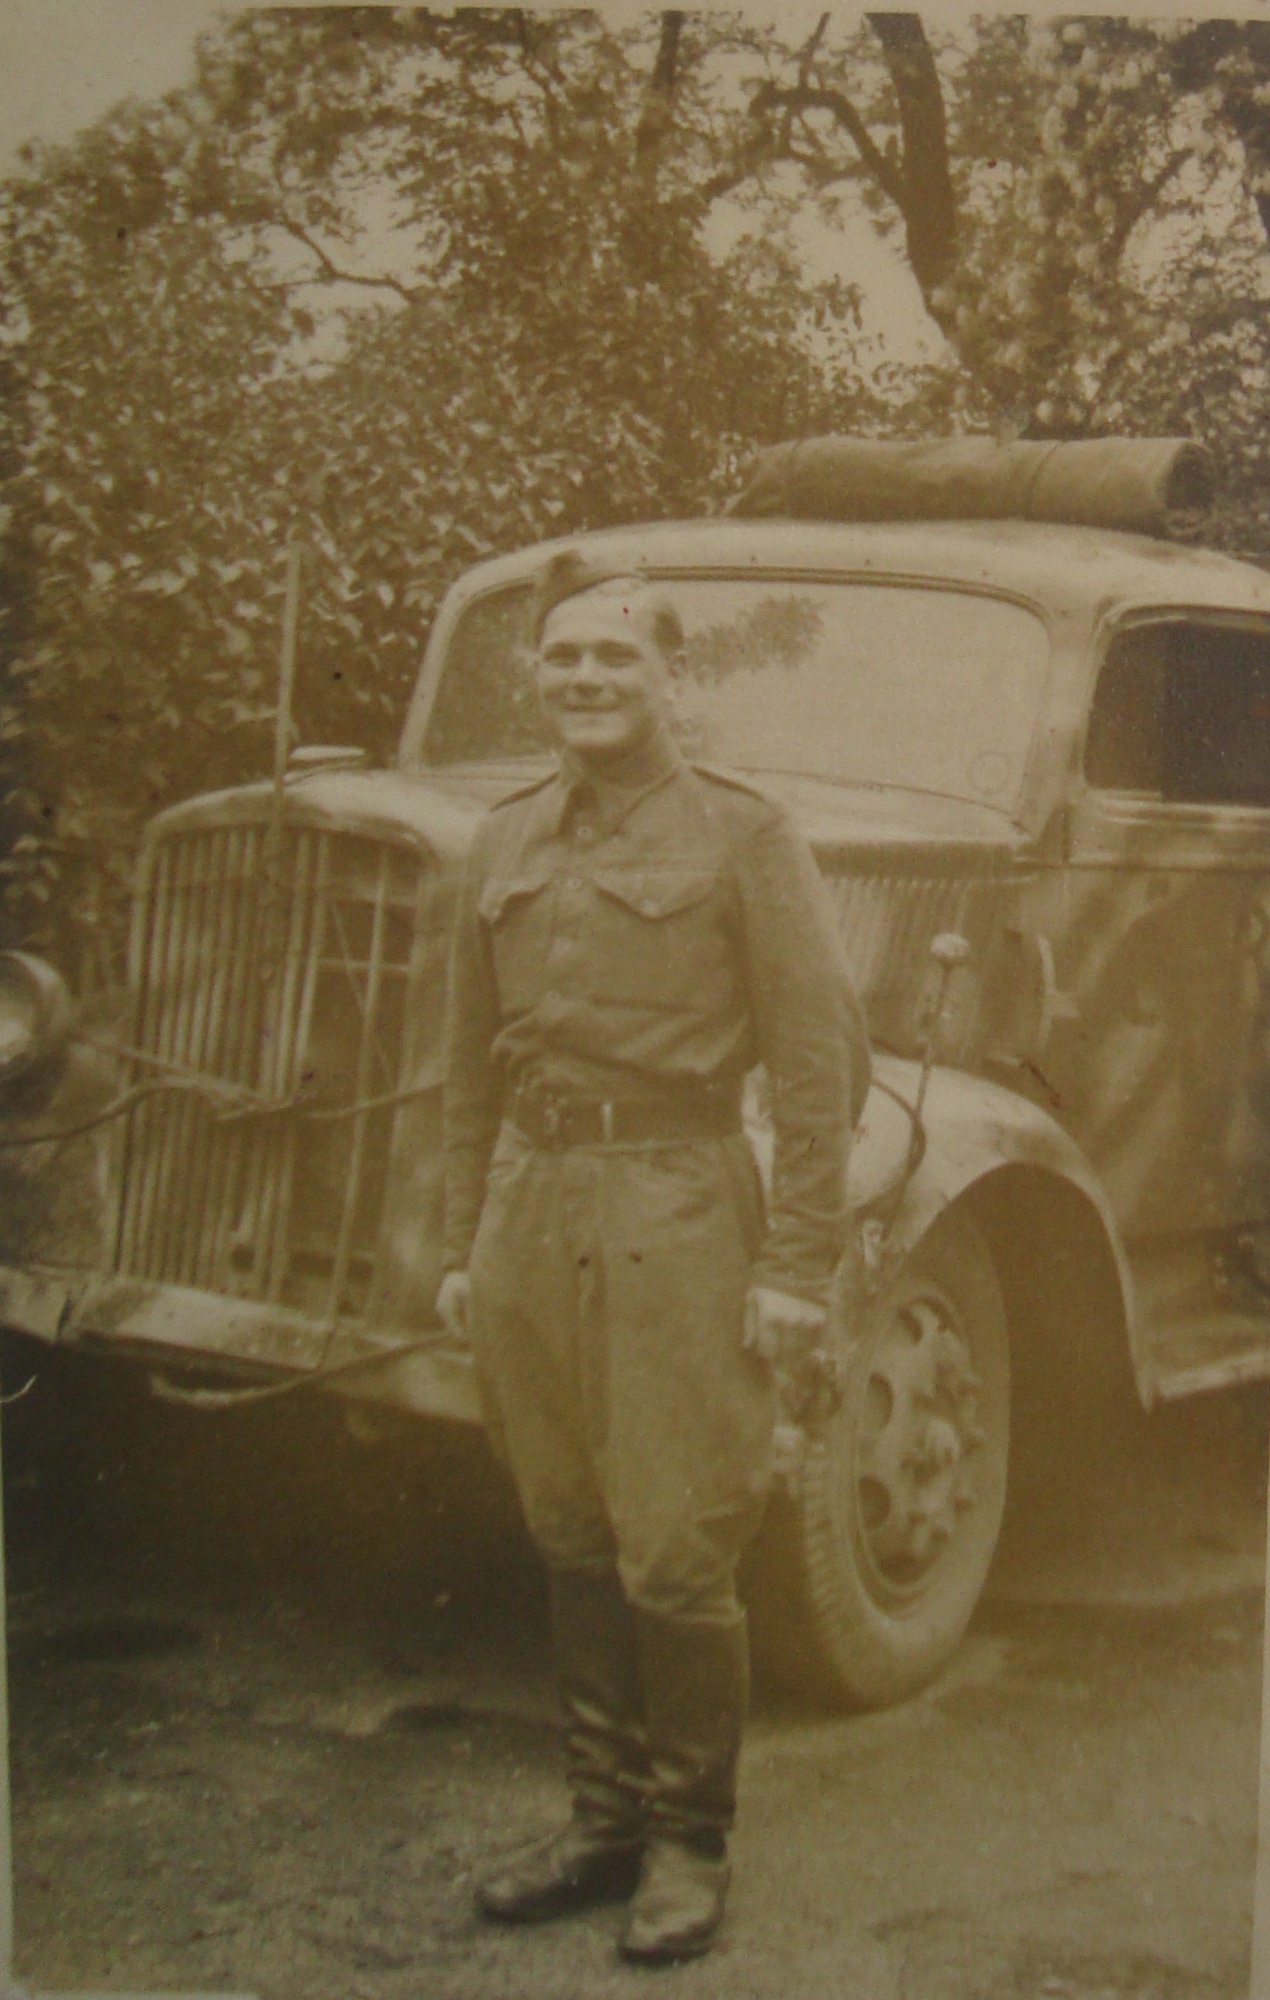 Josef Kovář in Letná, Prague 1945